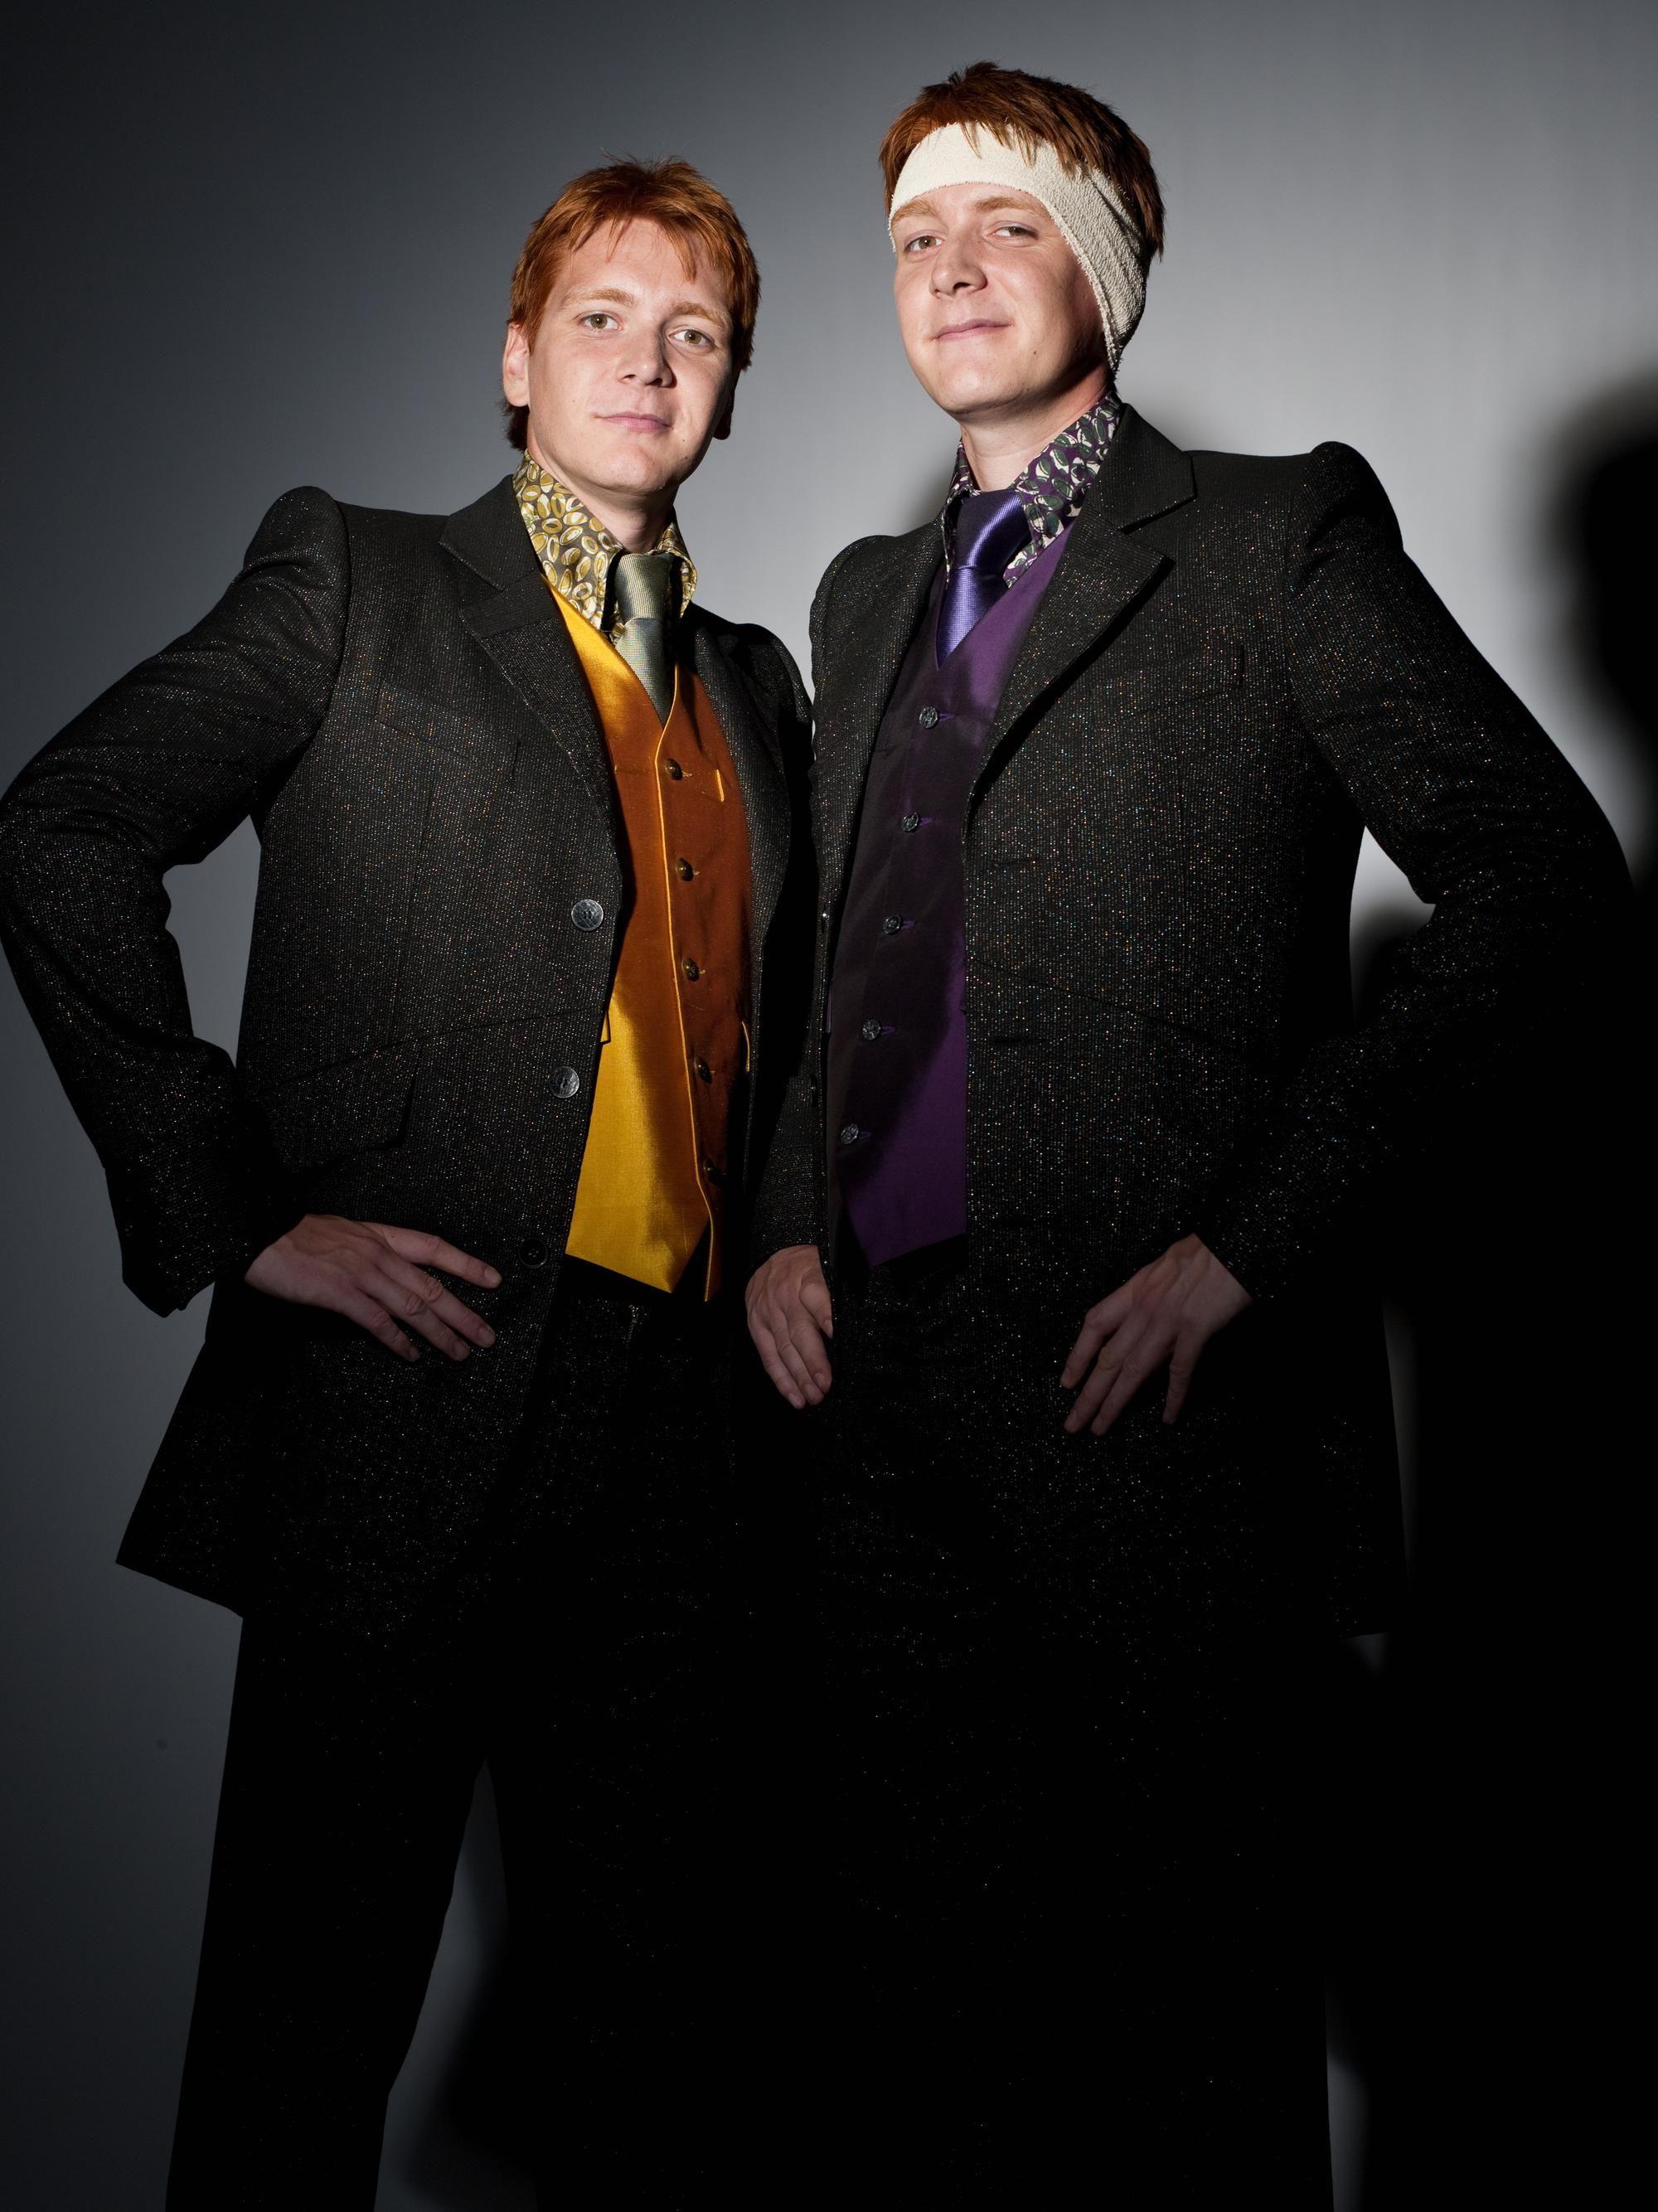 Fred And George Weasley Costumes. fred weasley